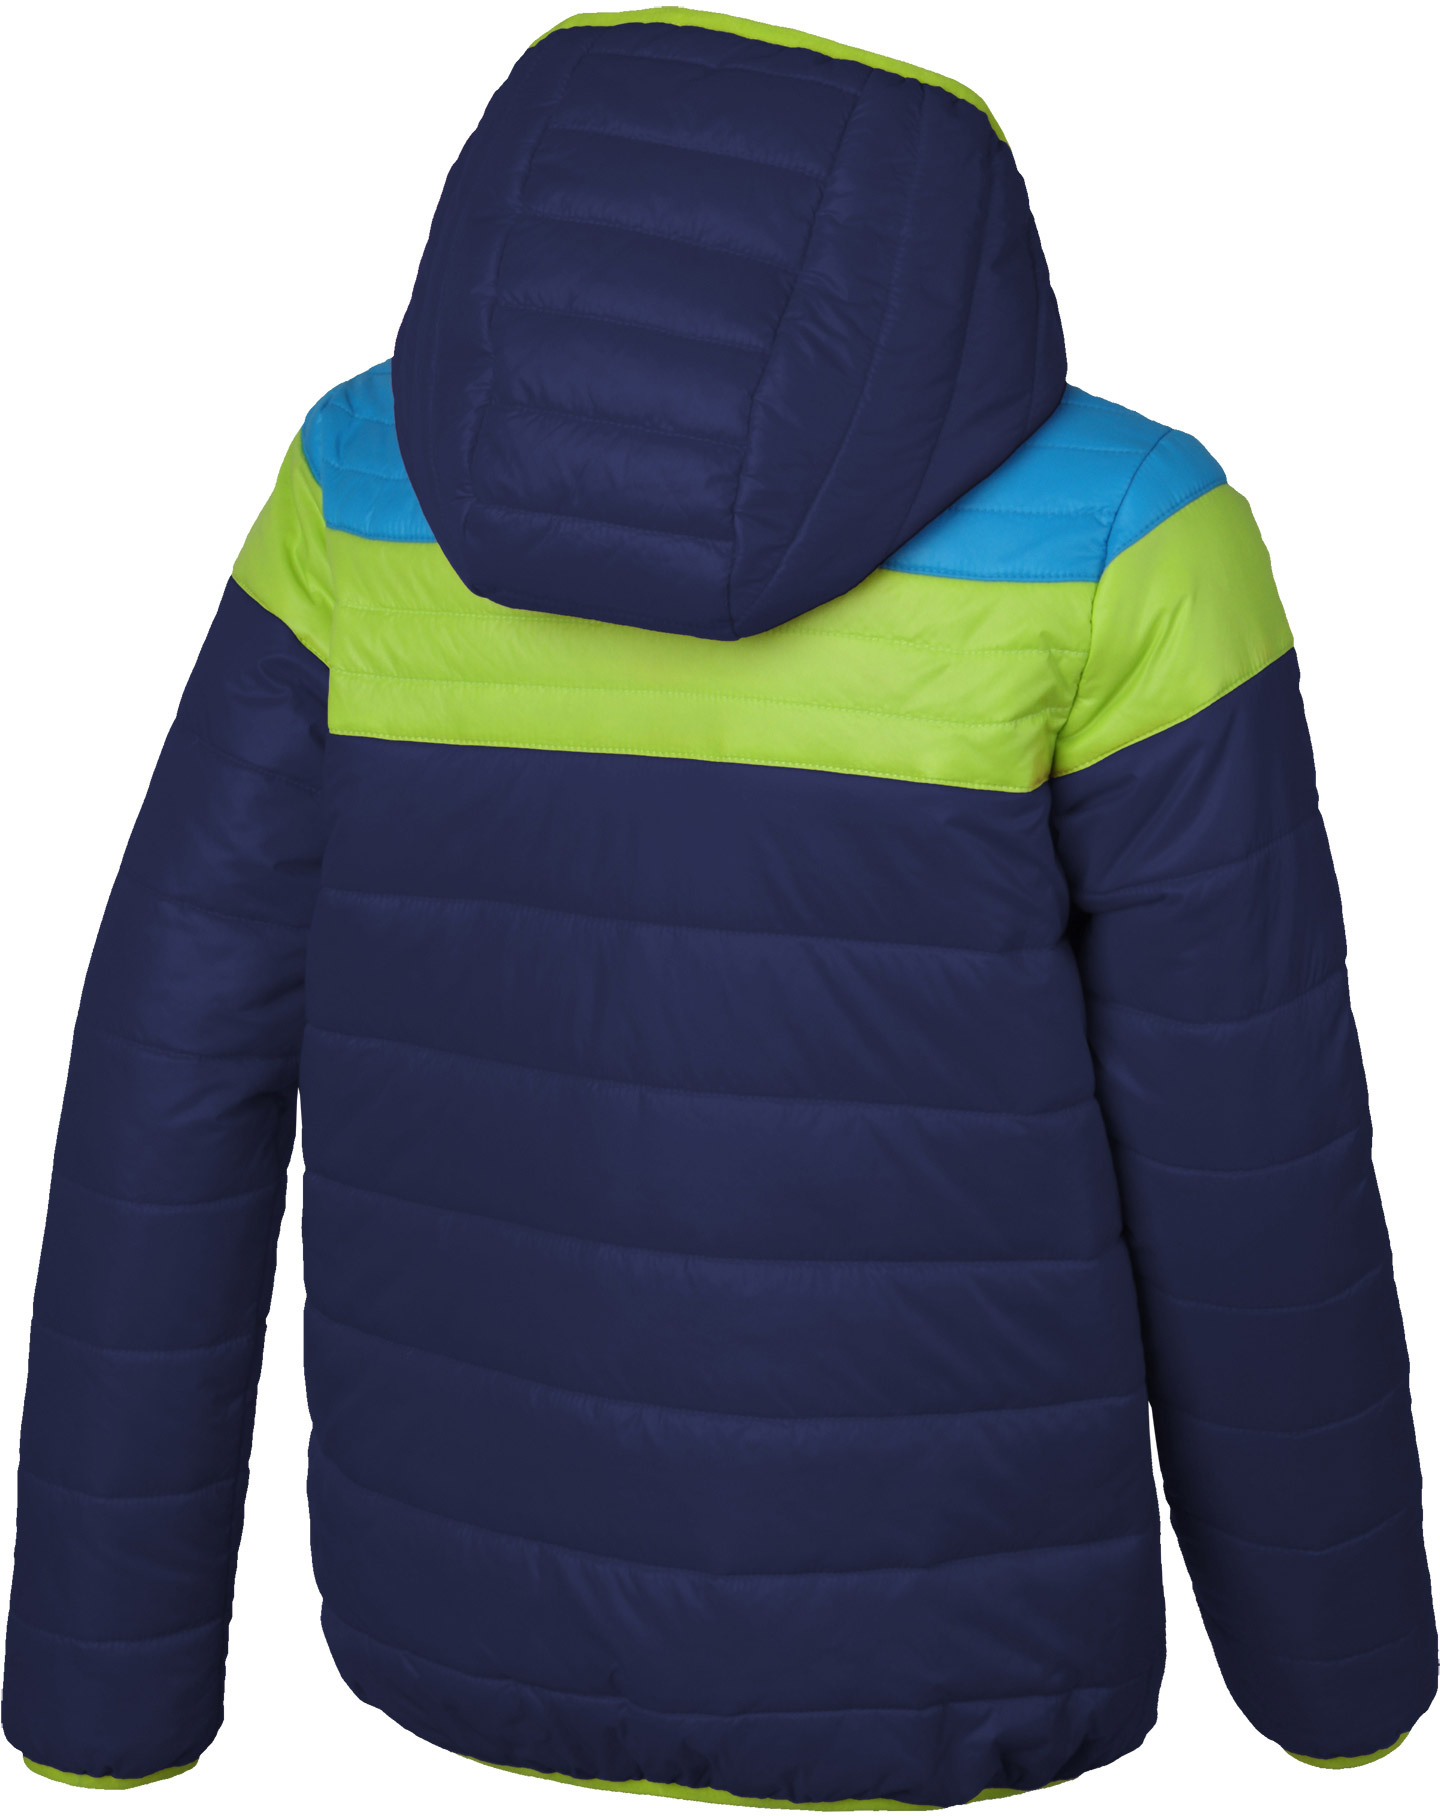 Kids’ insulated jacket